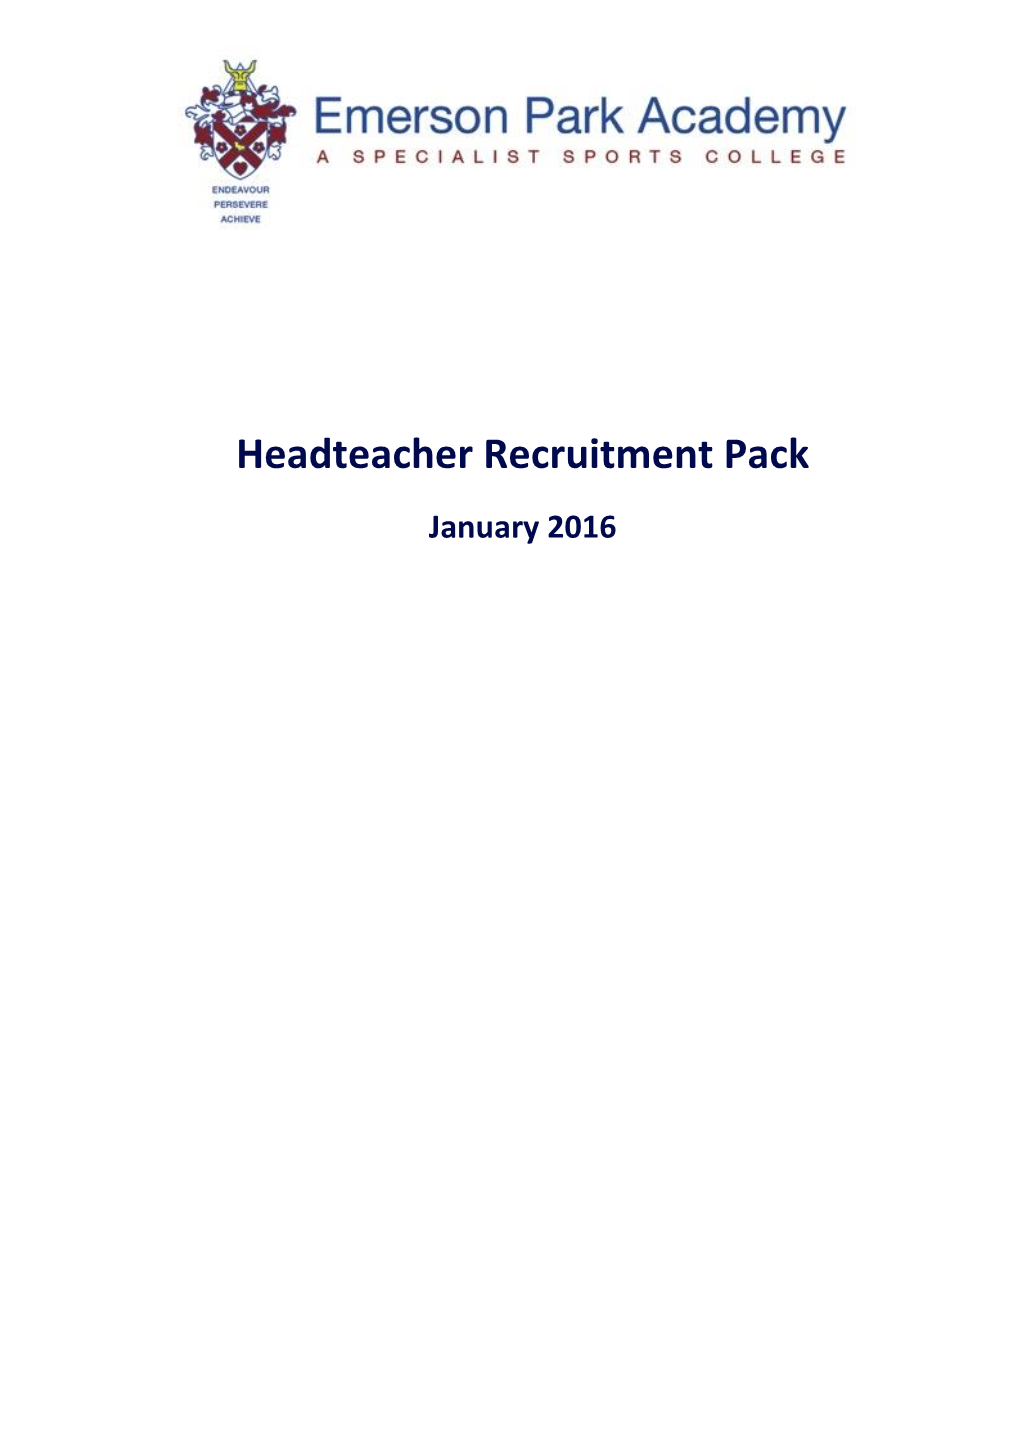 Headteacher Recruitment Pack January 2016